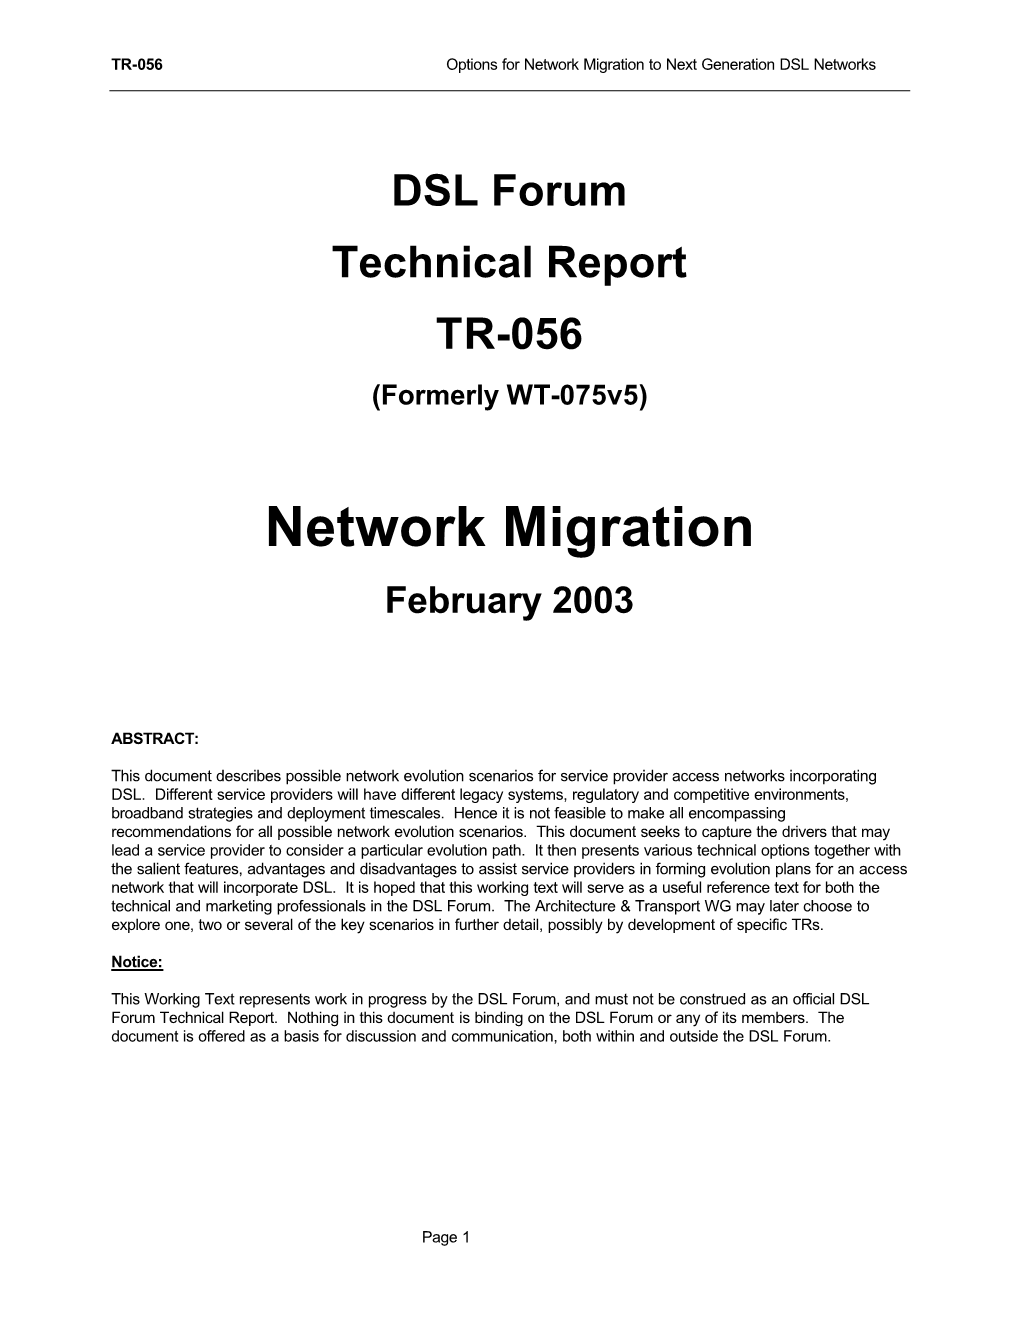 Network Migration to Next Generation DSL Networks